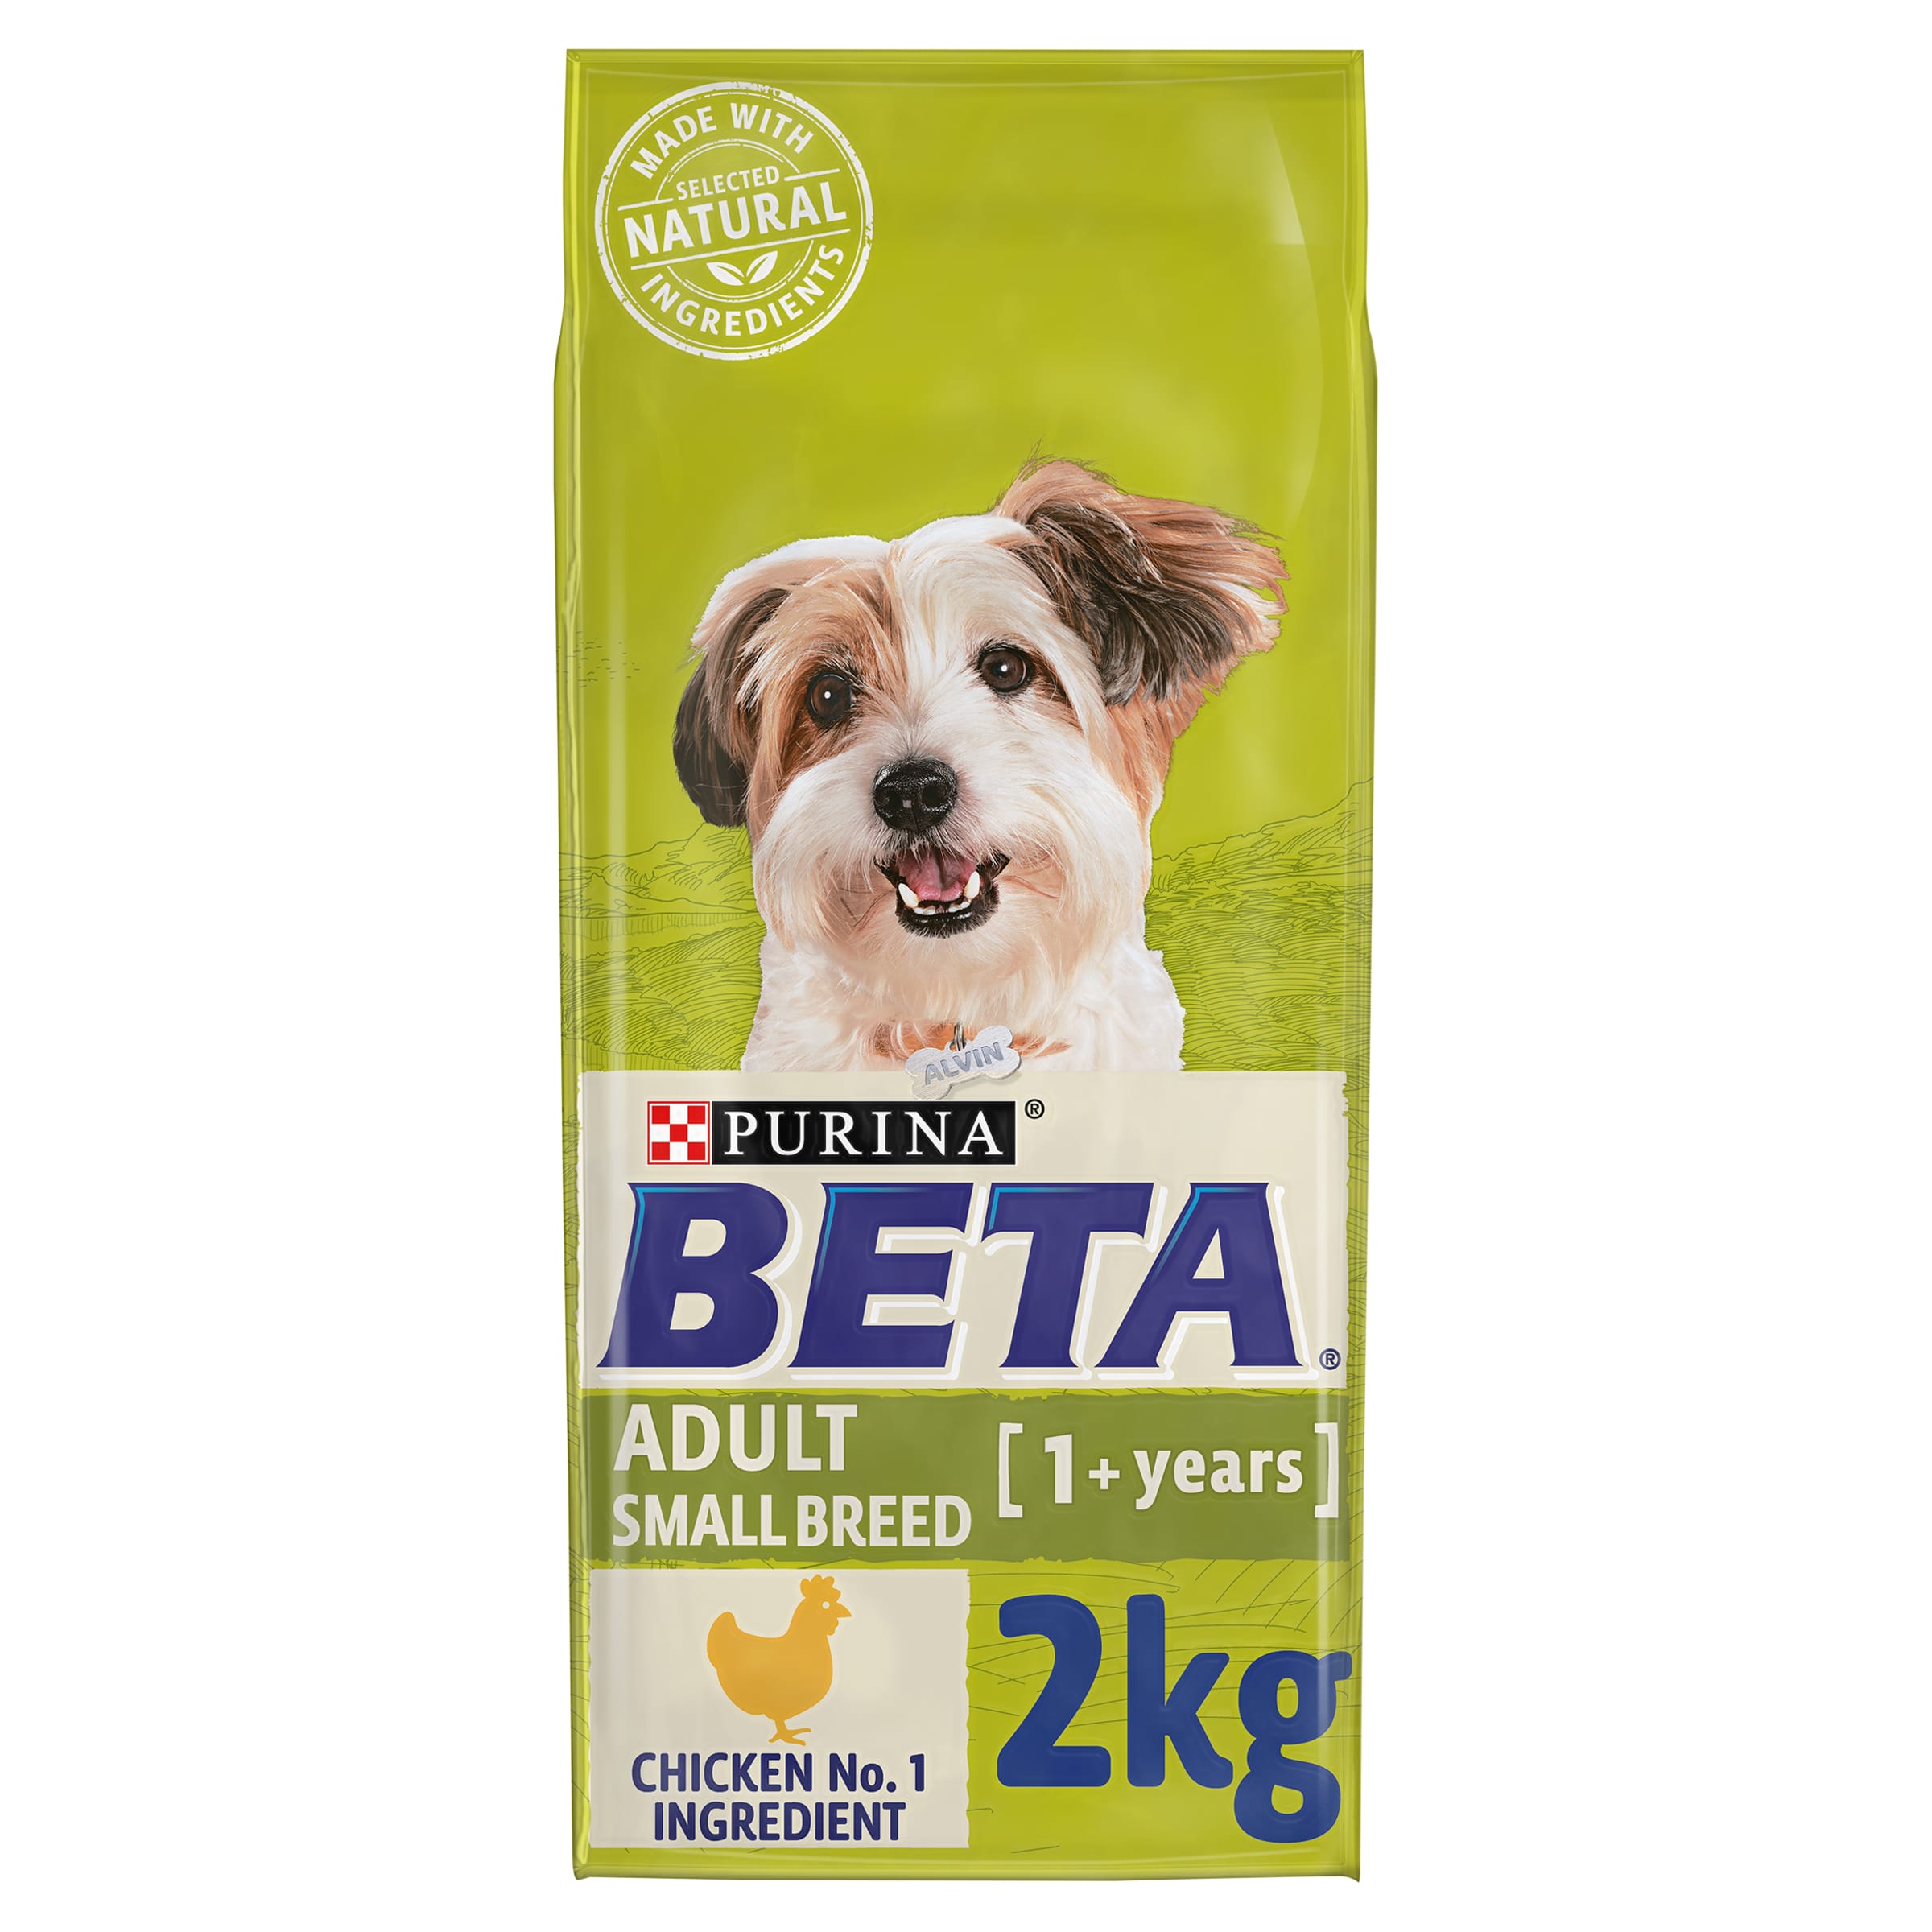 beta small breed dog food